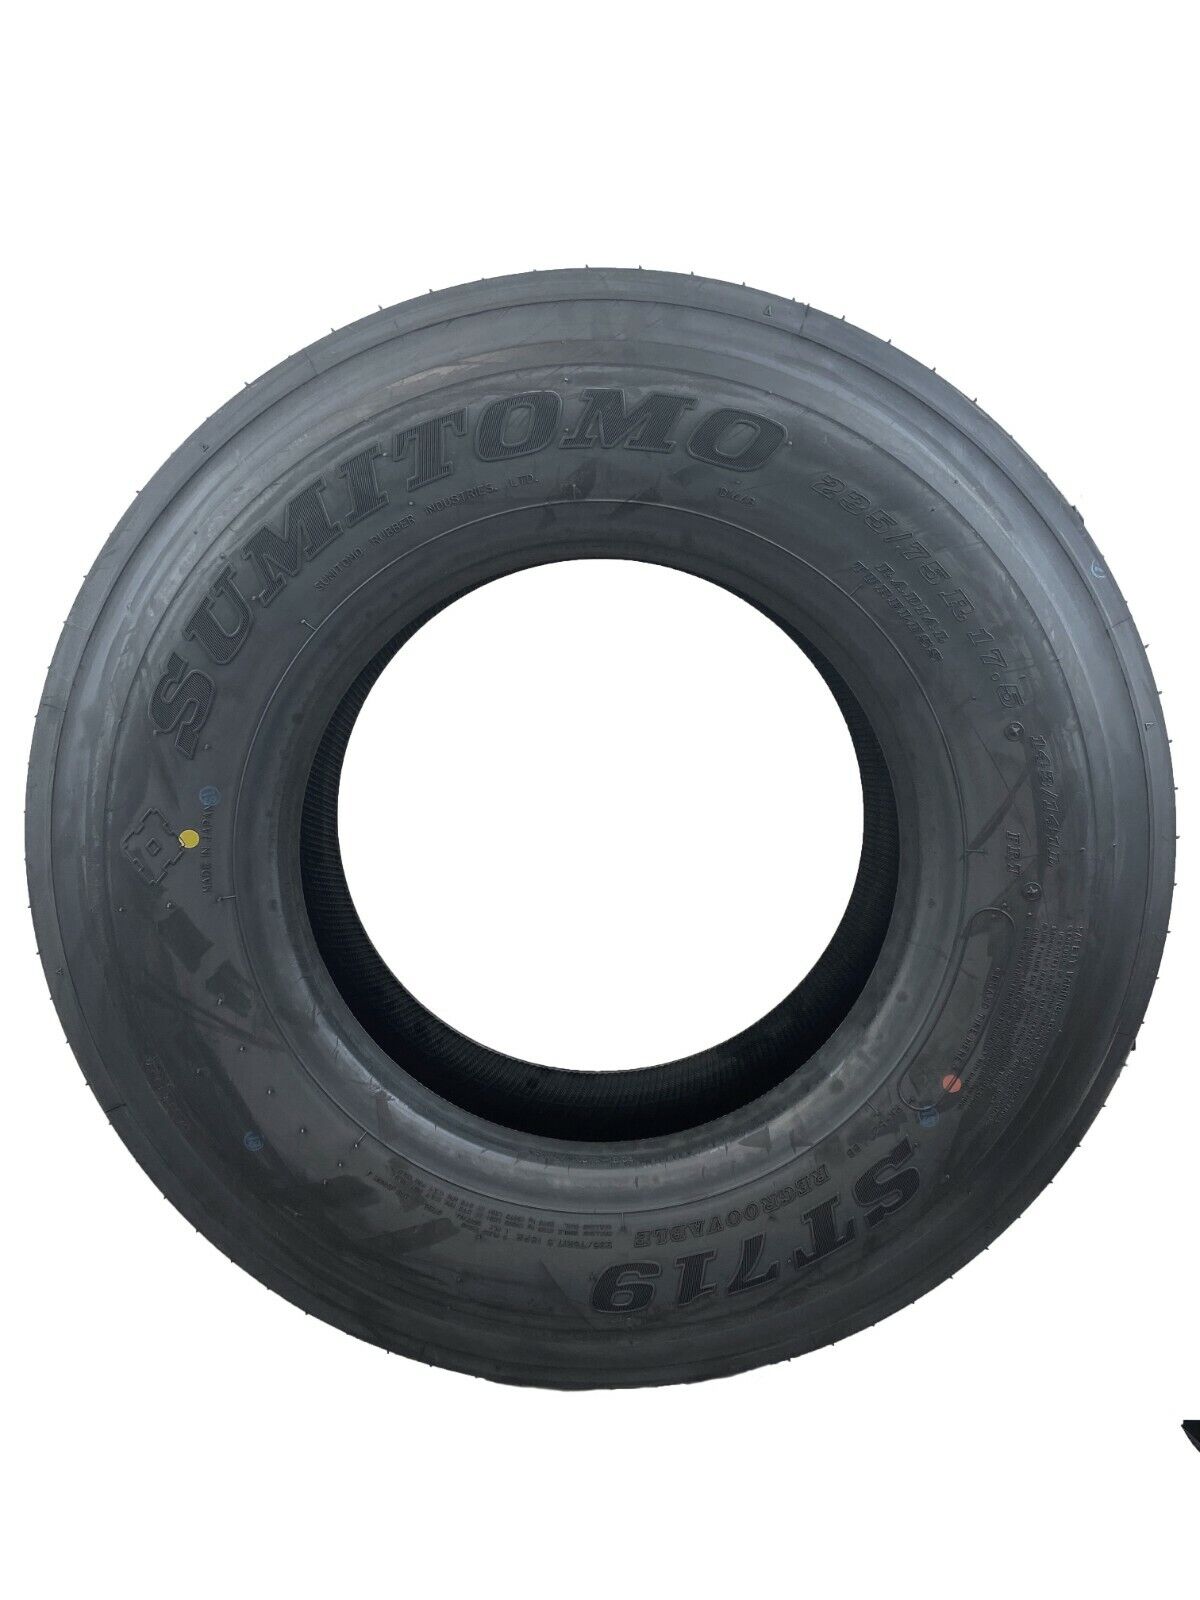 1 (One) New Sumitomo ST719 - 235/75R17.5 Tire 23575175 235 75 17.5